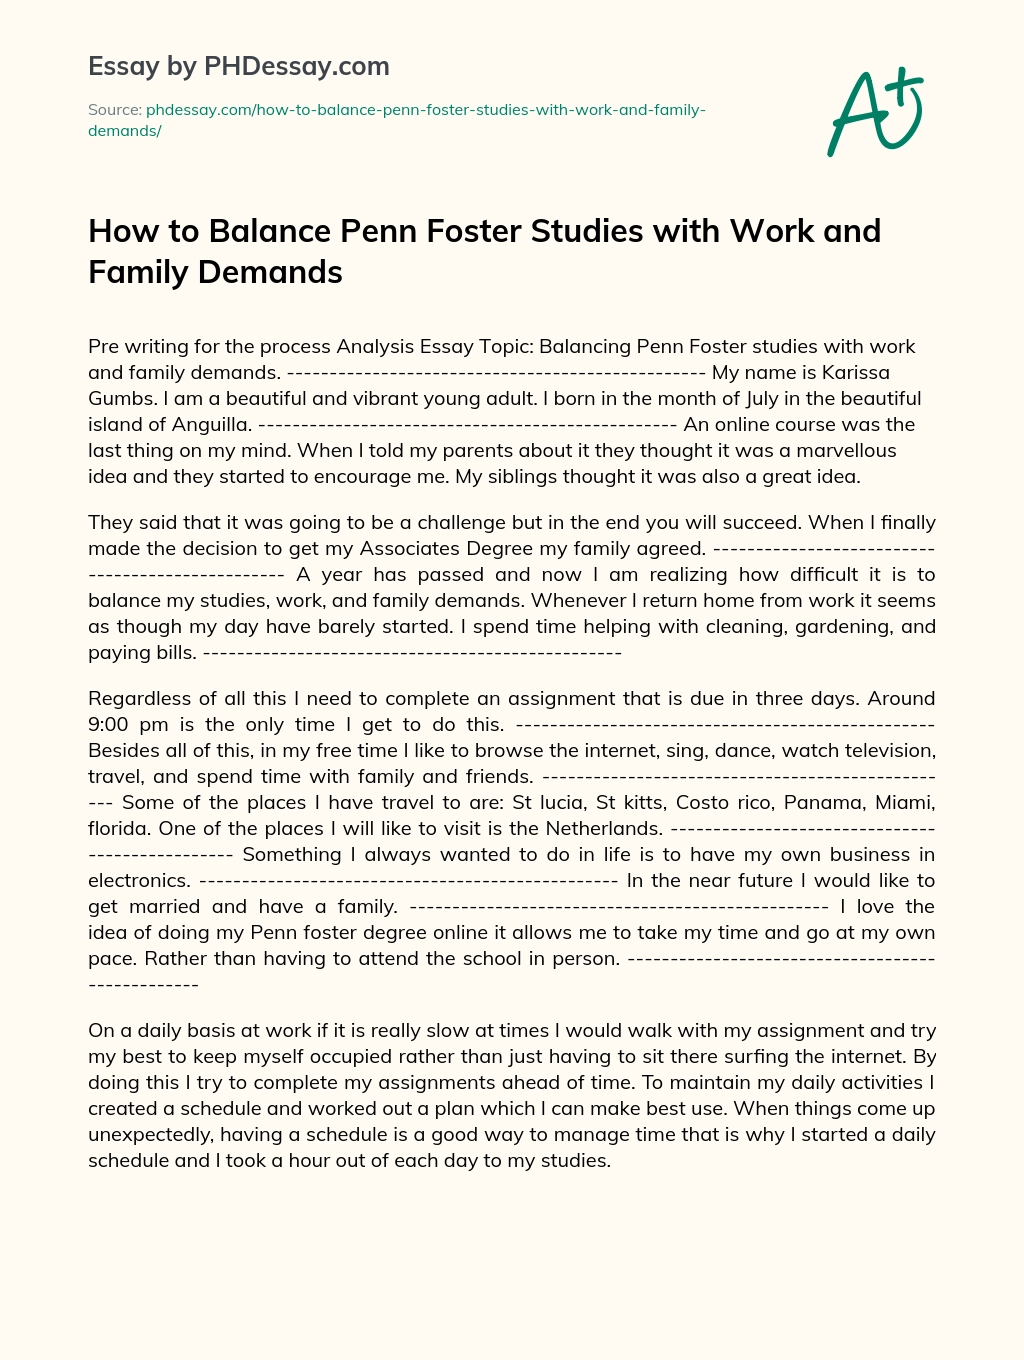 penn foster essay example